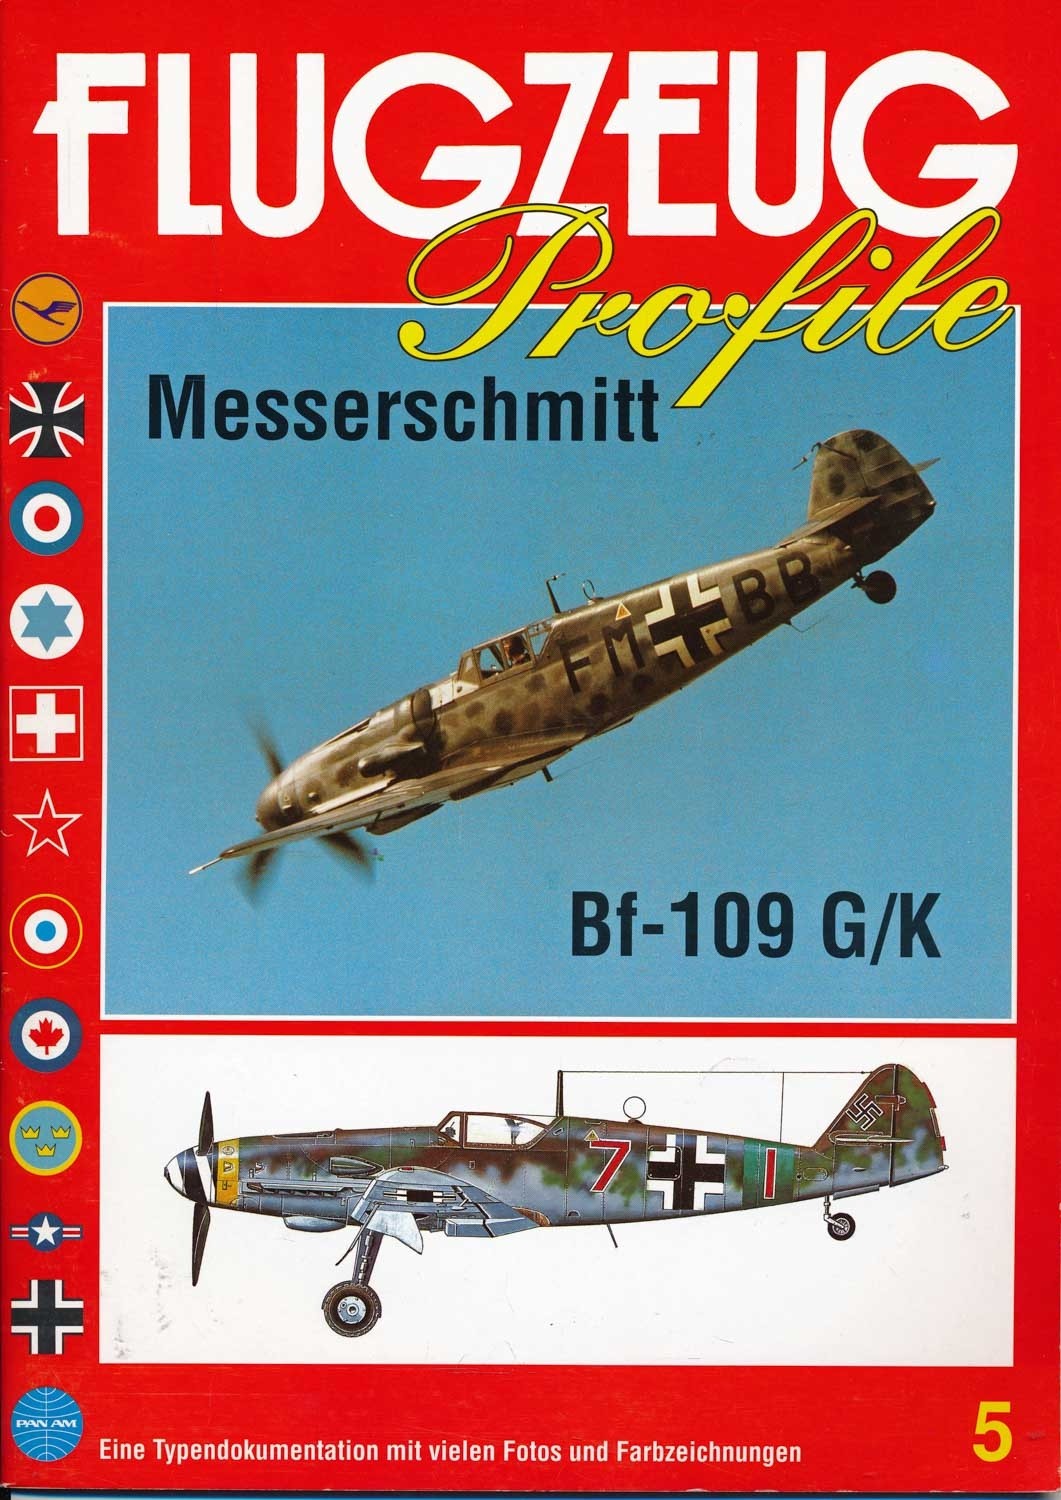 Bf109G/K: Flugzeug Profile 5